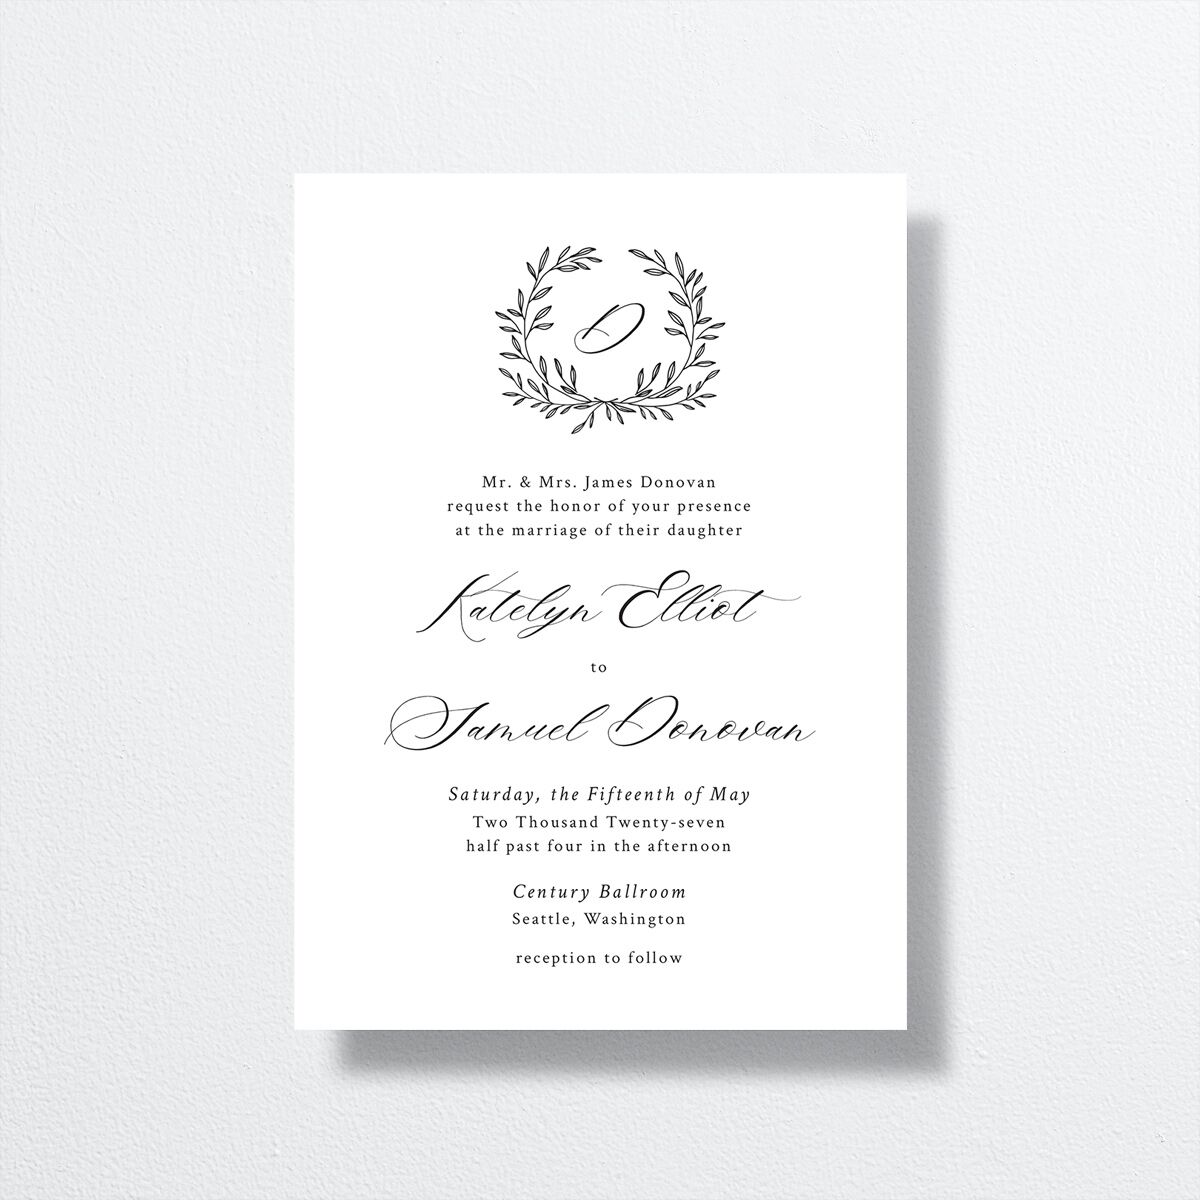 Monogram Wreath Wedding Invitations front in black